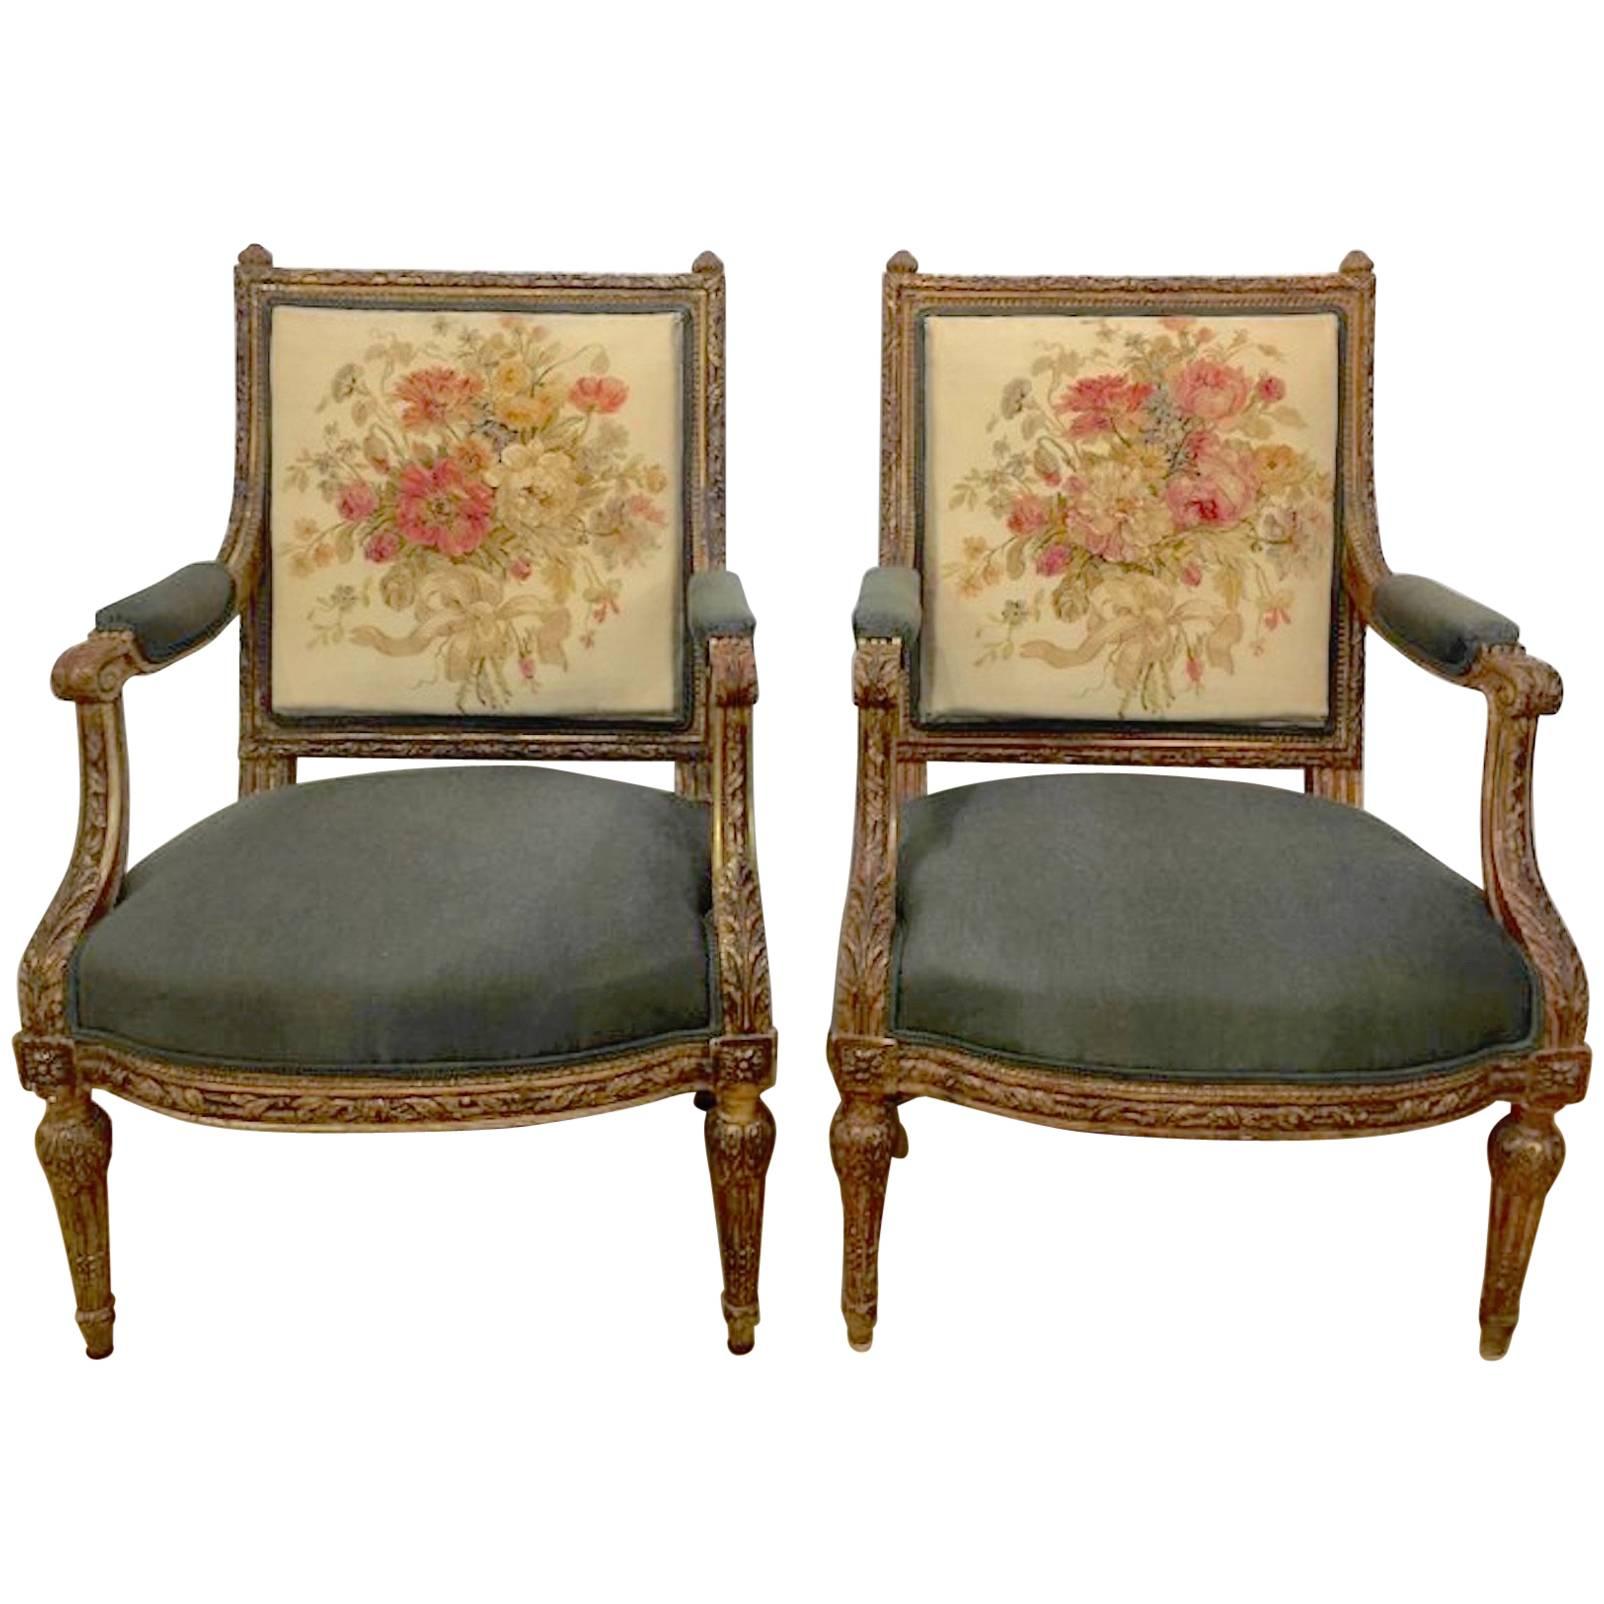 19th Century Louis XVI Style Aubusson Chairs, a Pair